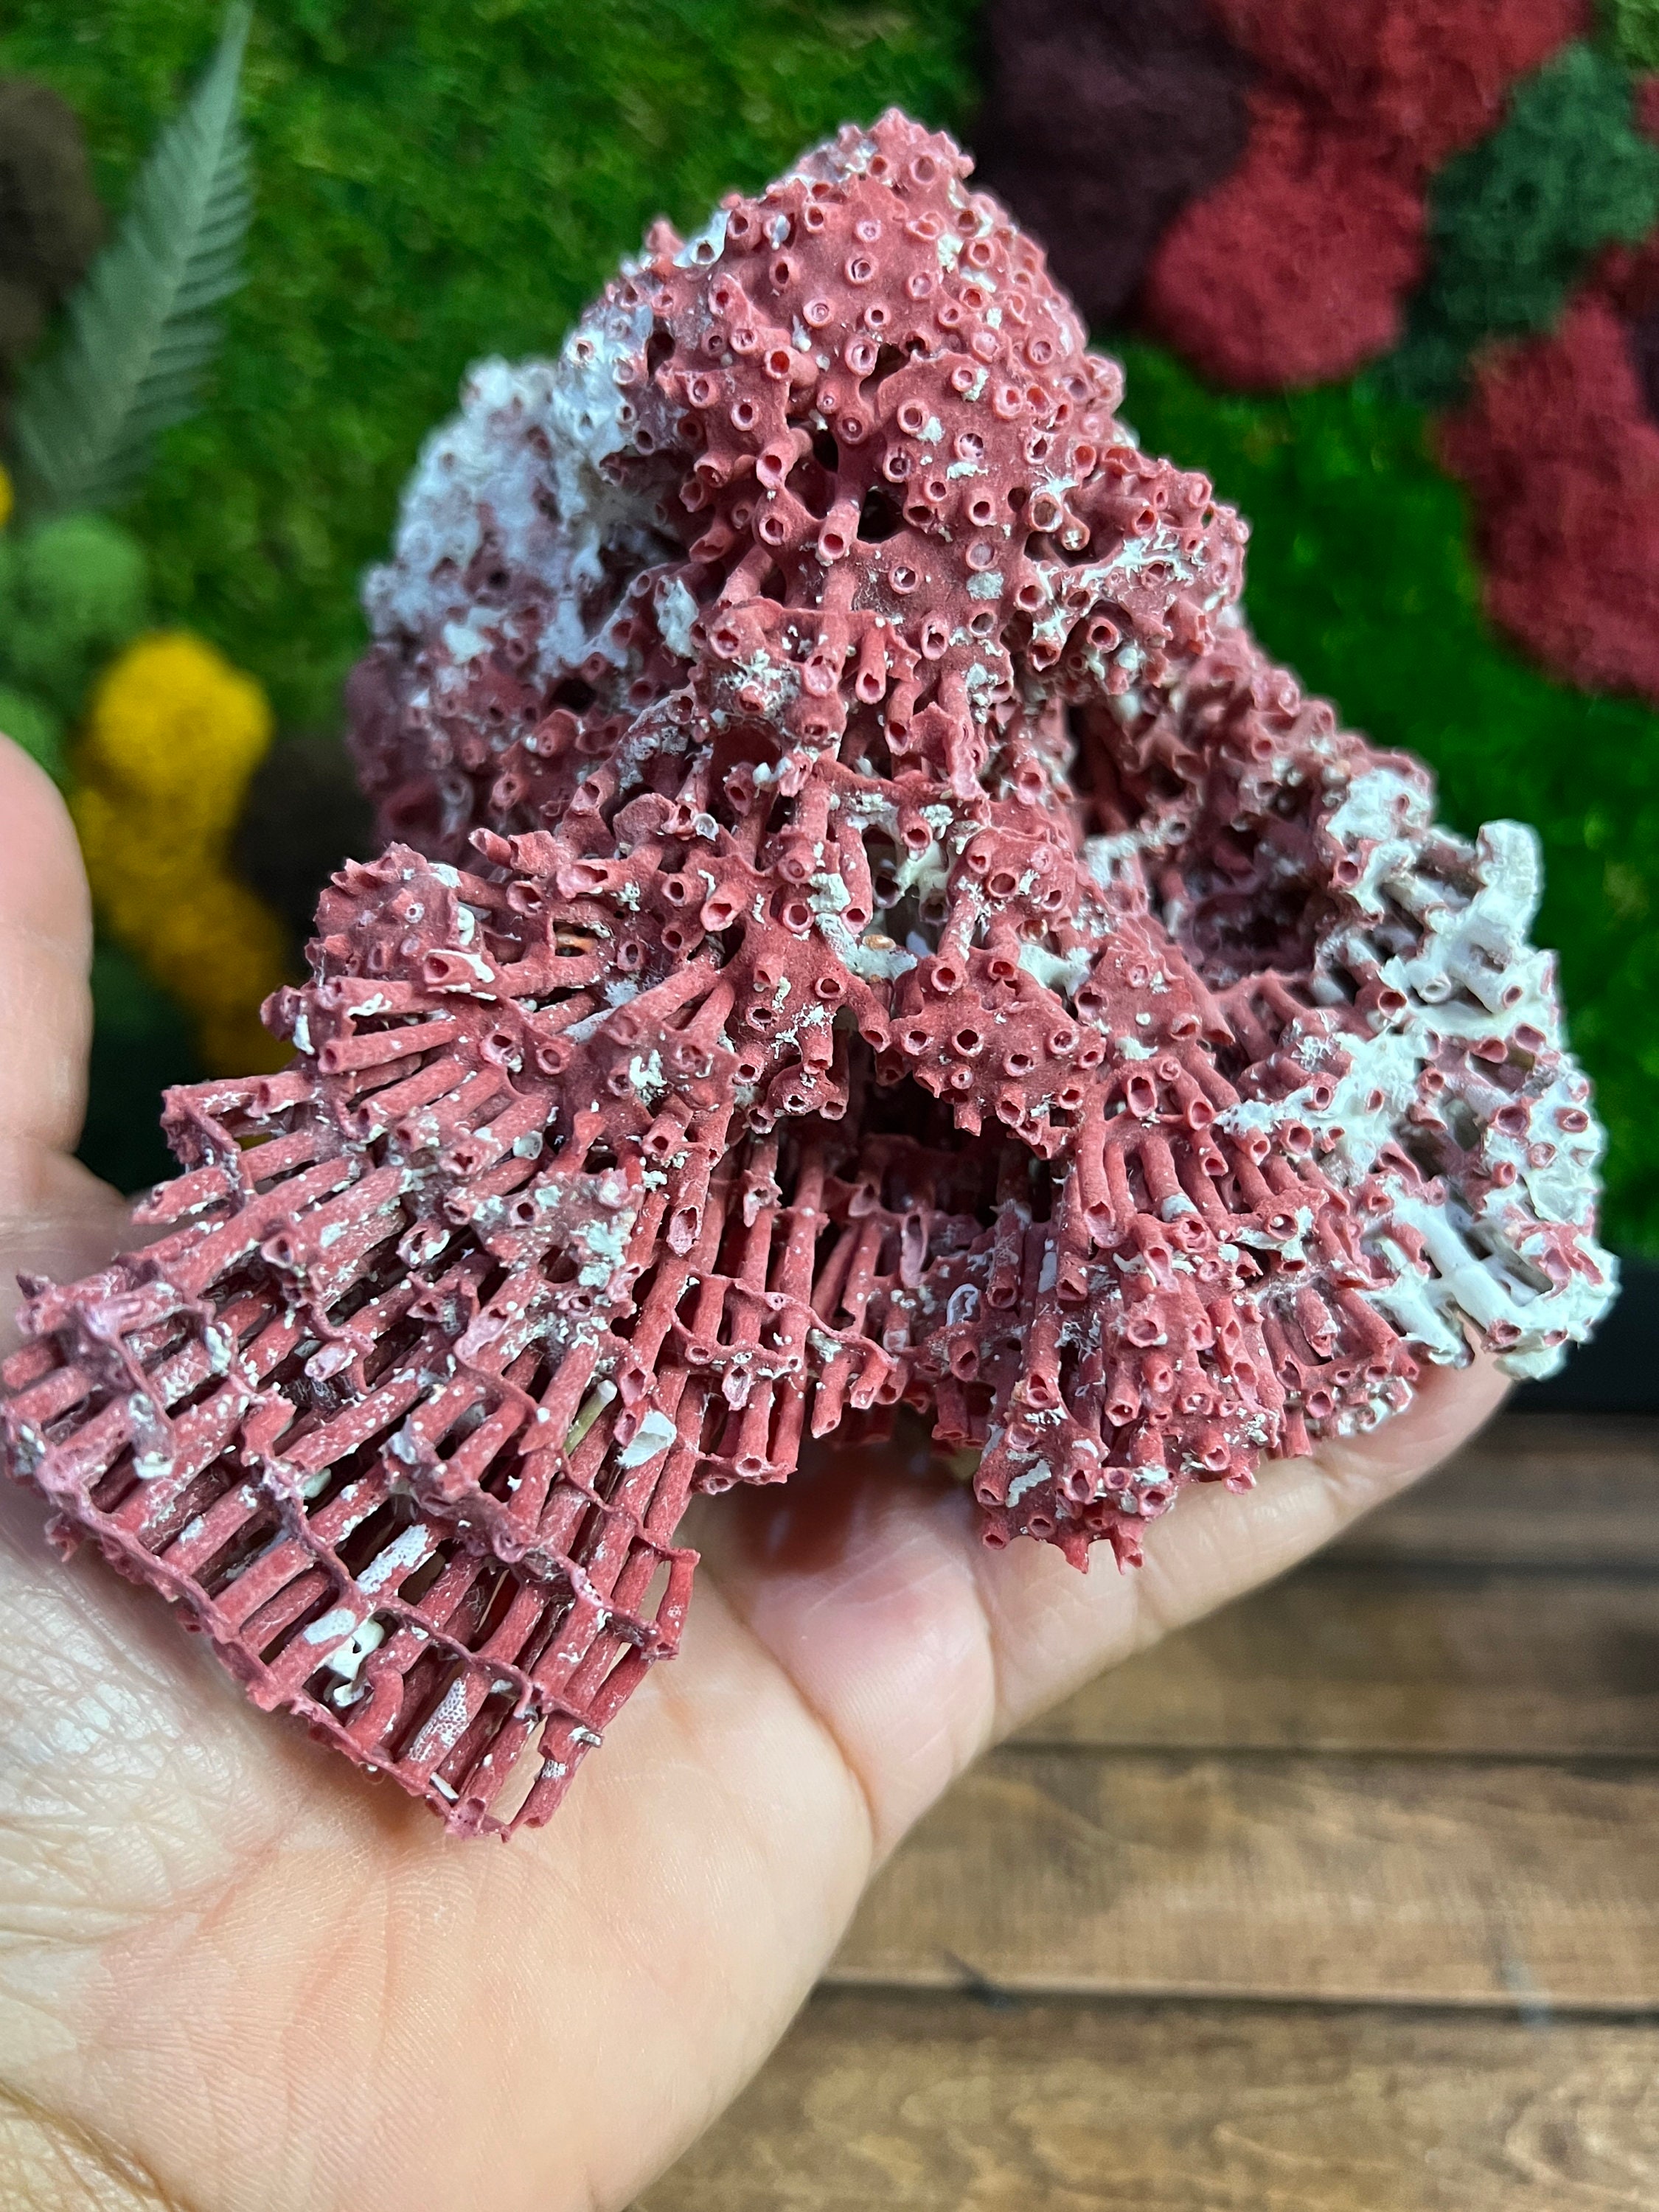 Red Pipe Organ Coral 